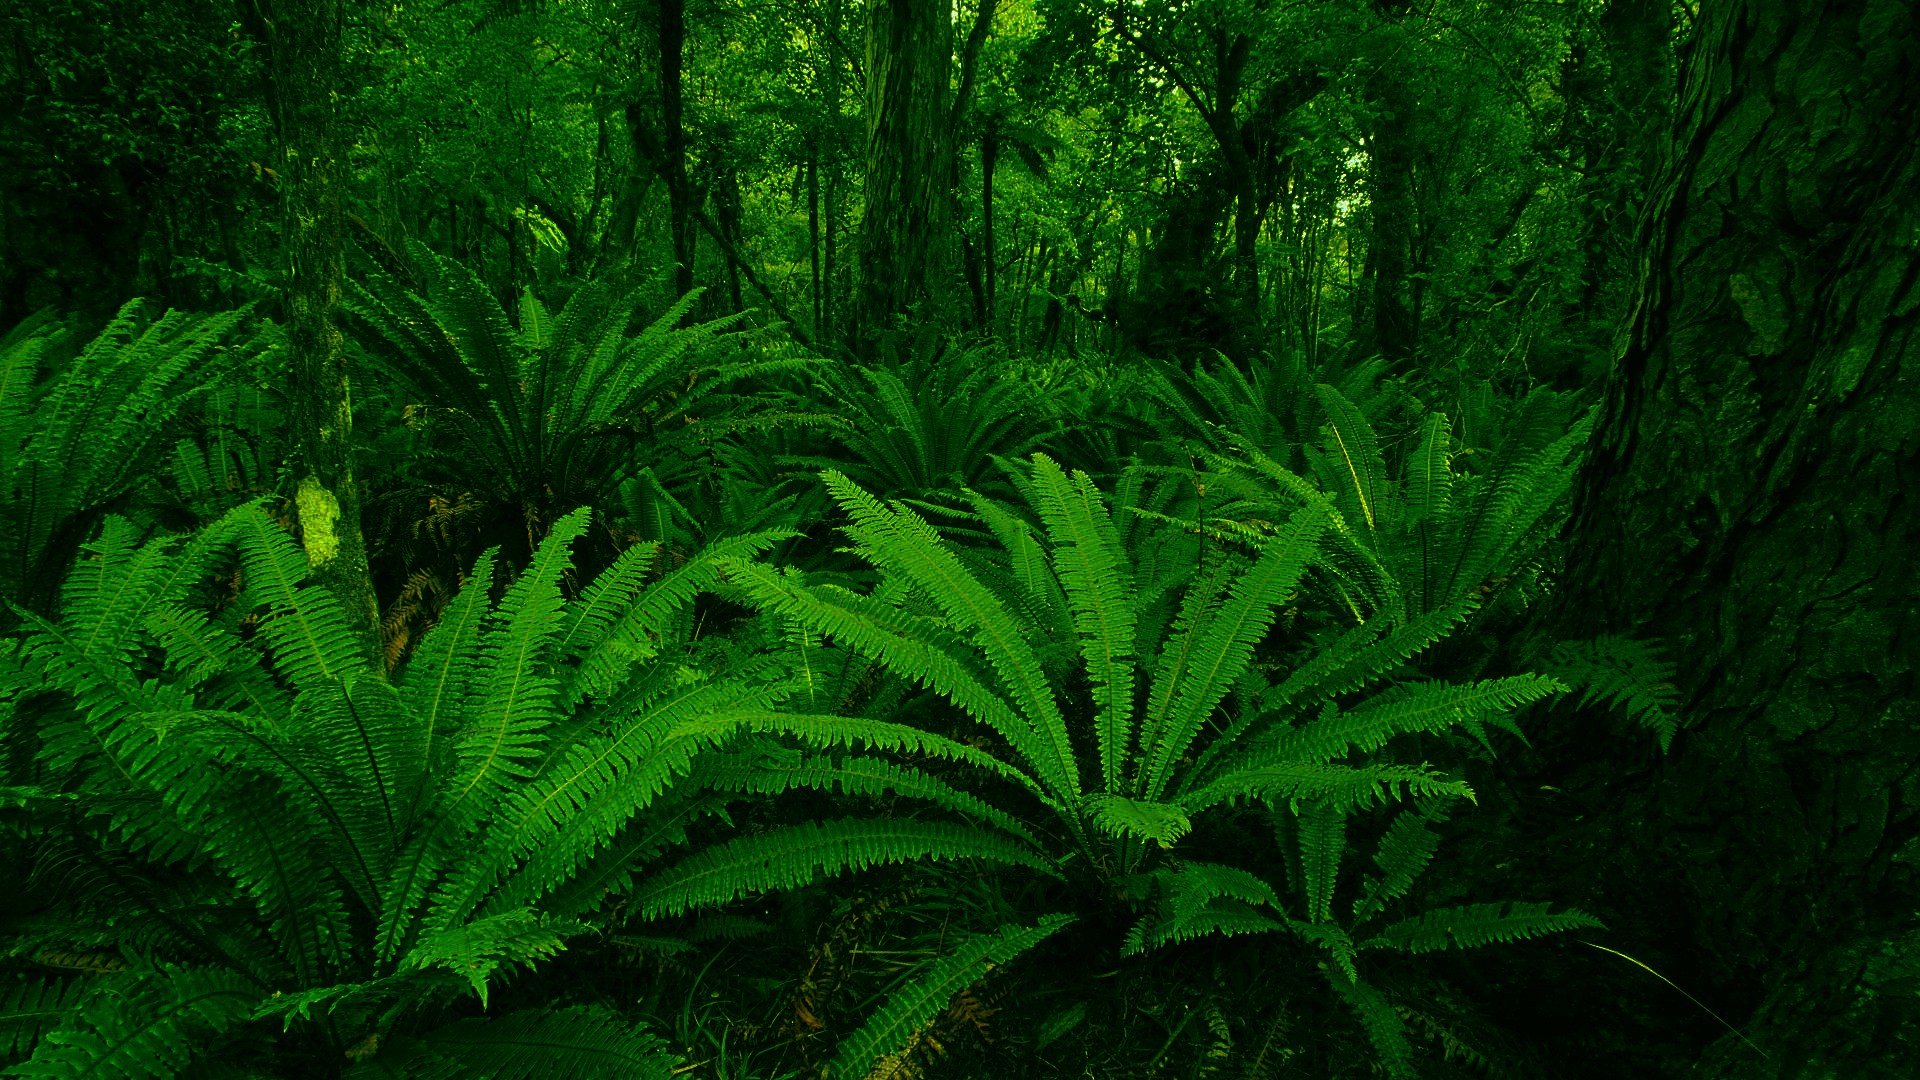 General 1920x1080 ferns nature wilderness forest plants outdoors green jungle